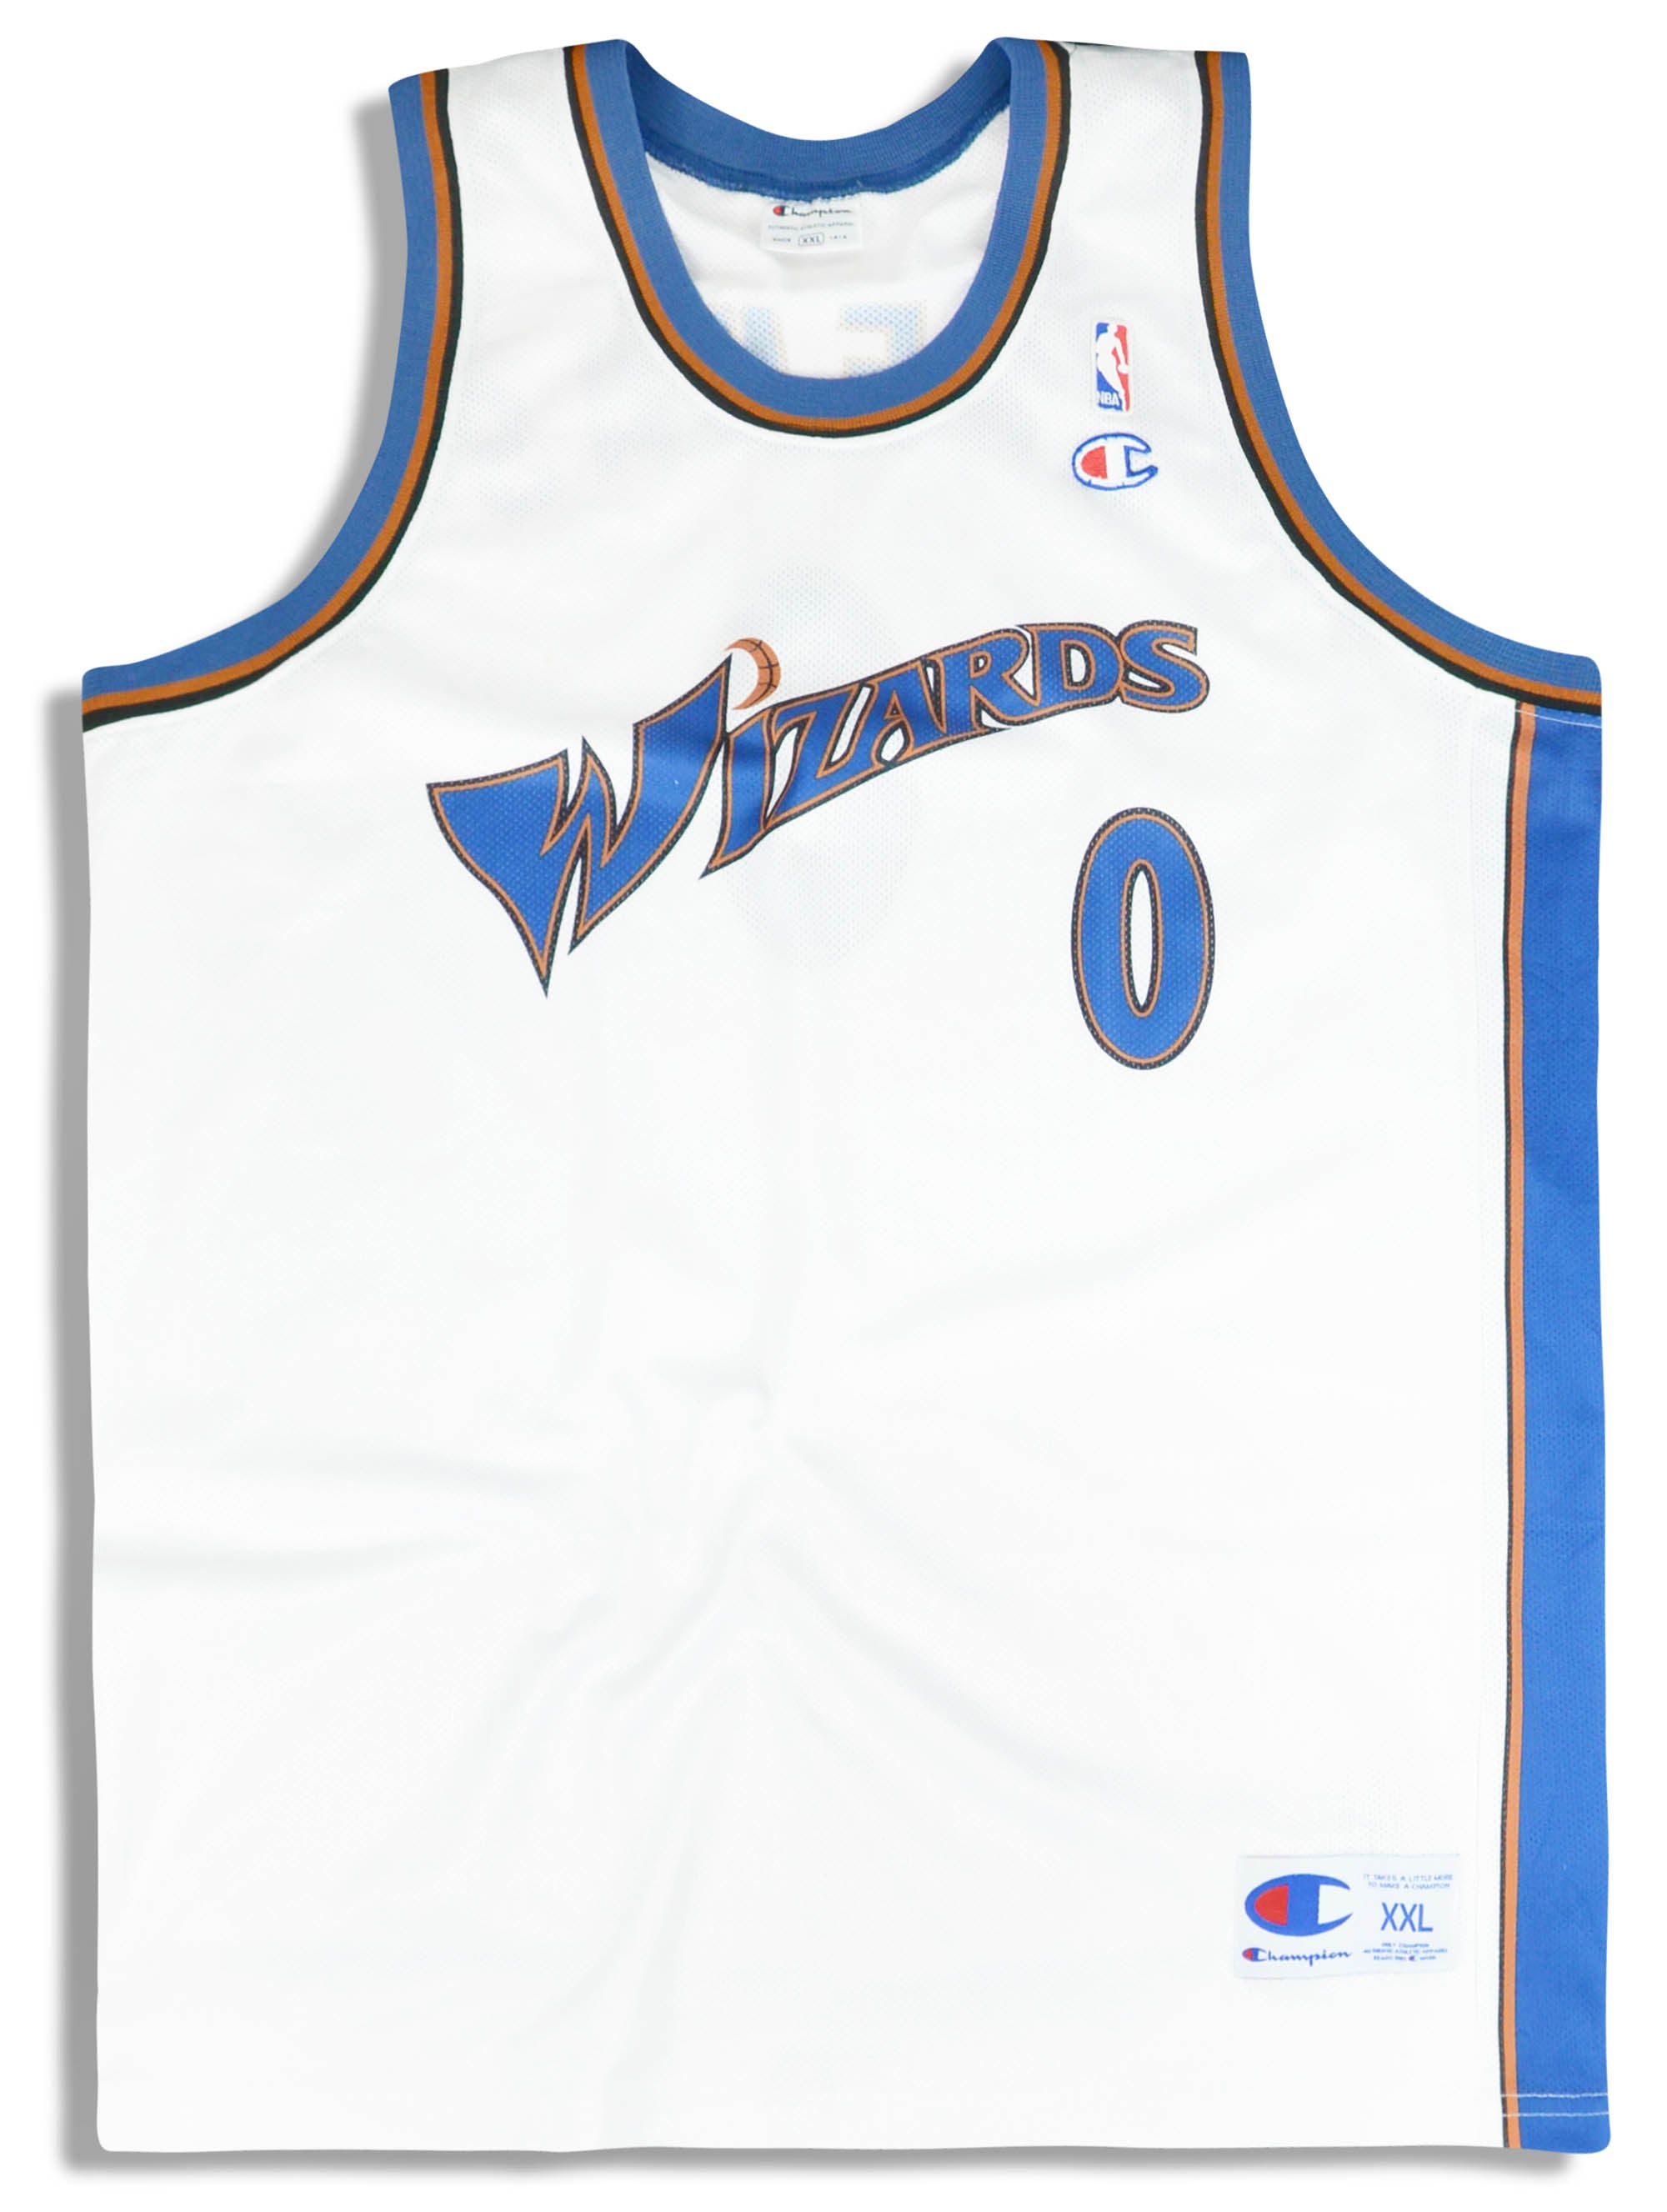 Washington Wizards Alternate Uniform (2007) - 'Wizards' on white on gold  jersey wit…